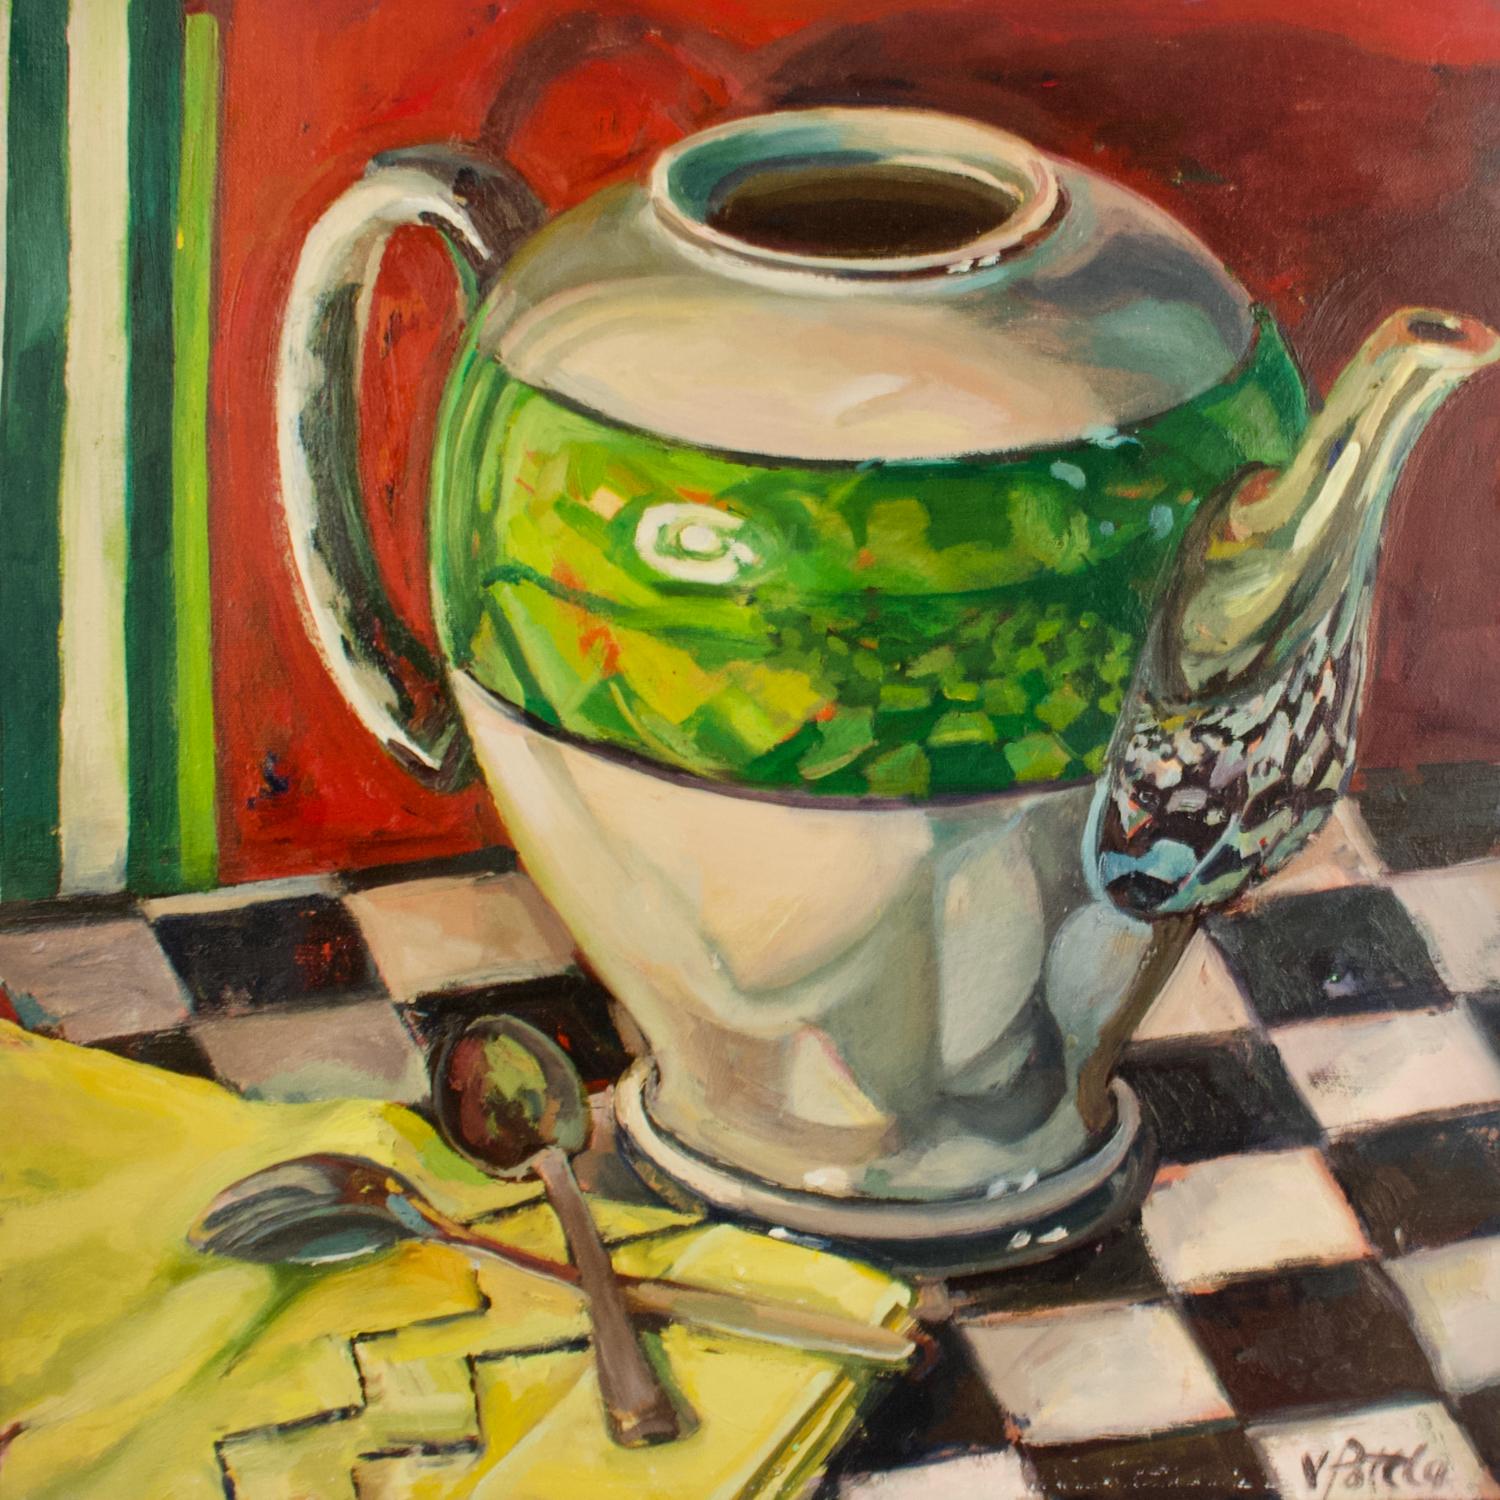 Jill Pottle Still-Life Painting - "Green Stripe Teapot", contemporary, green, red, black, still life, oil painting